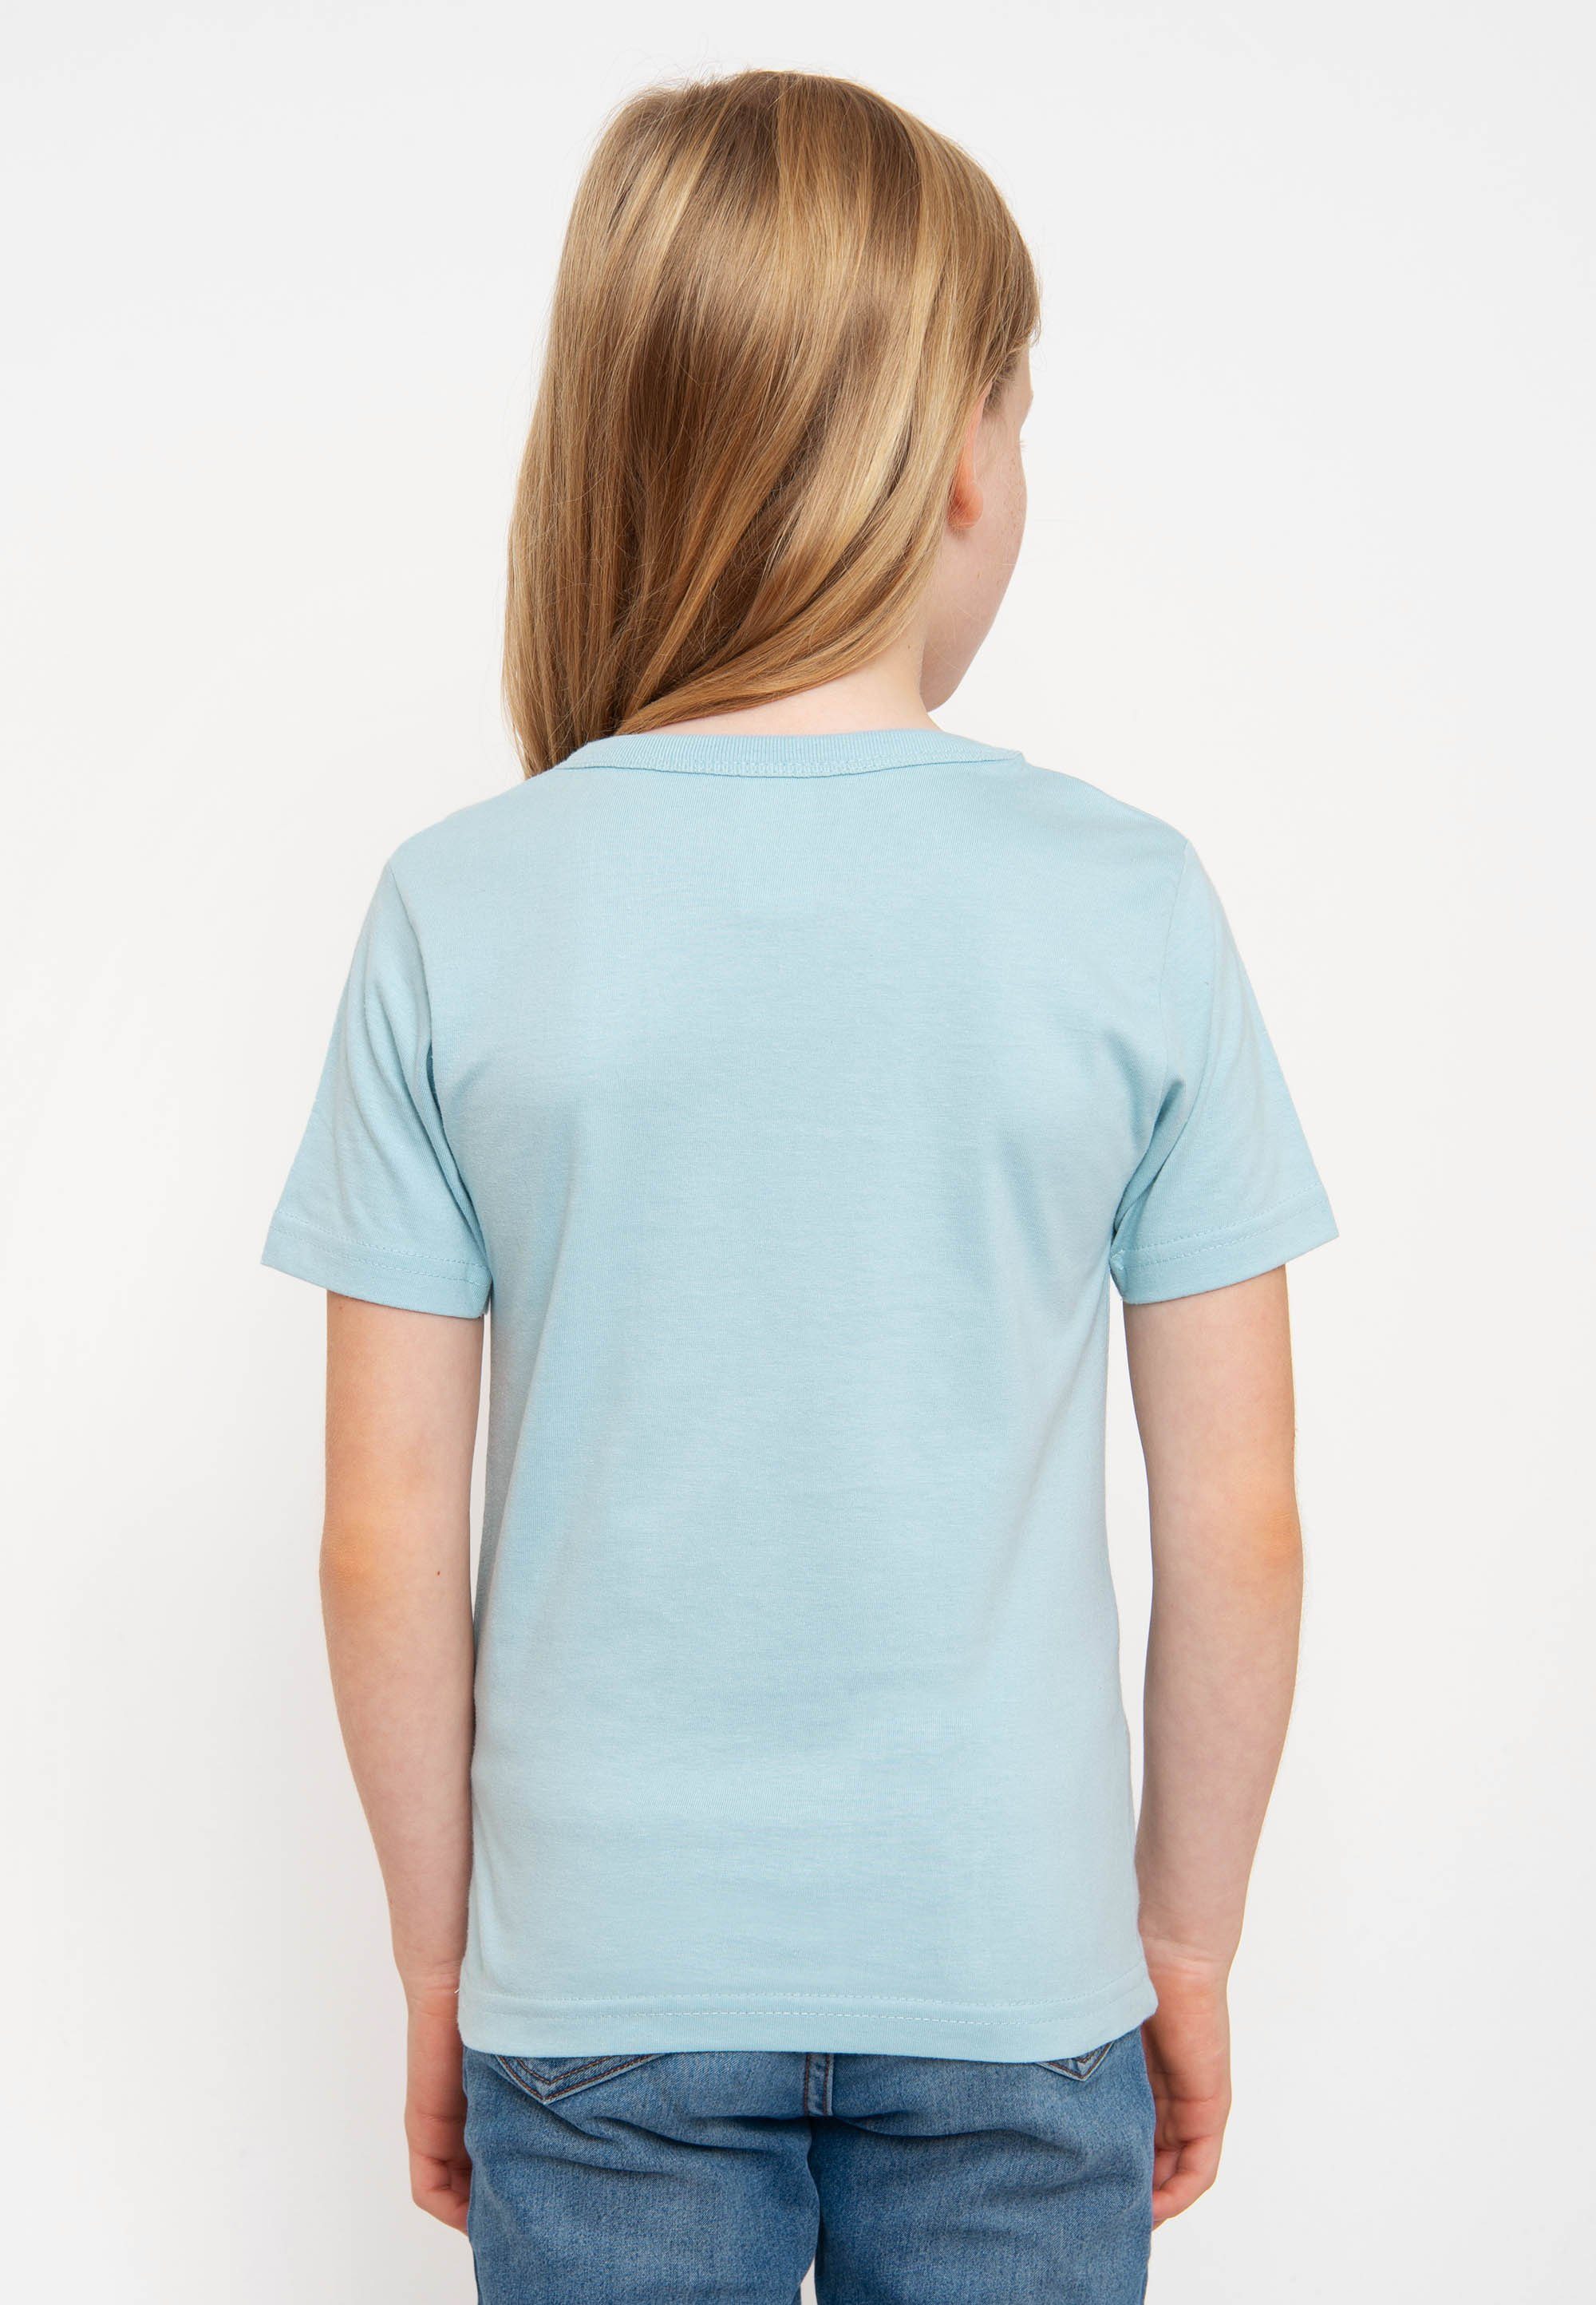 - T-Shirt mit hellblau LOGOSHIRT Frontprint Sesamstraße Krümelmonster coolem